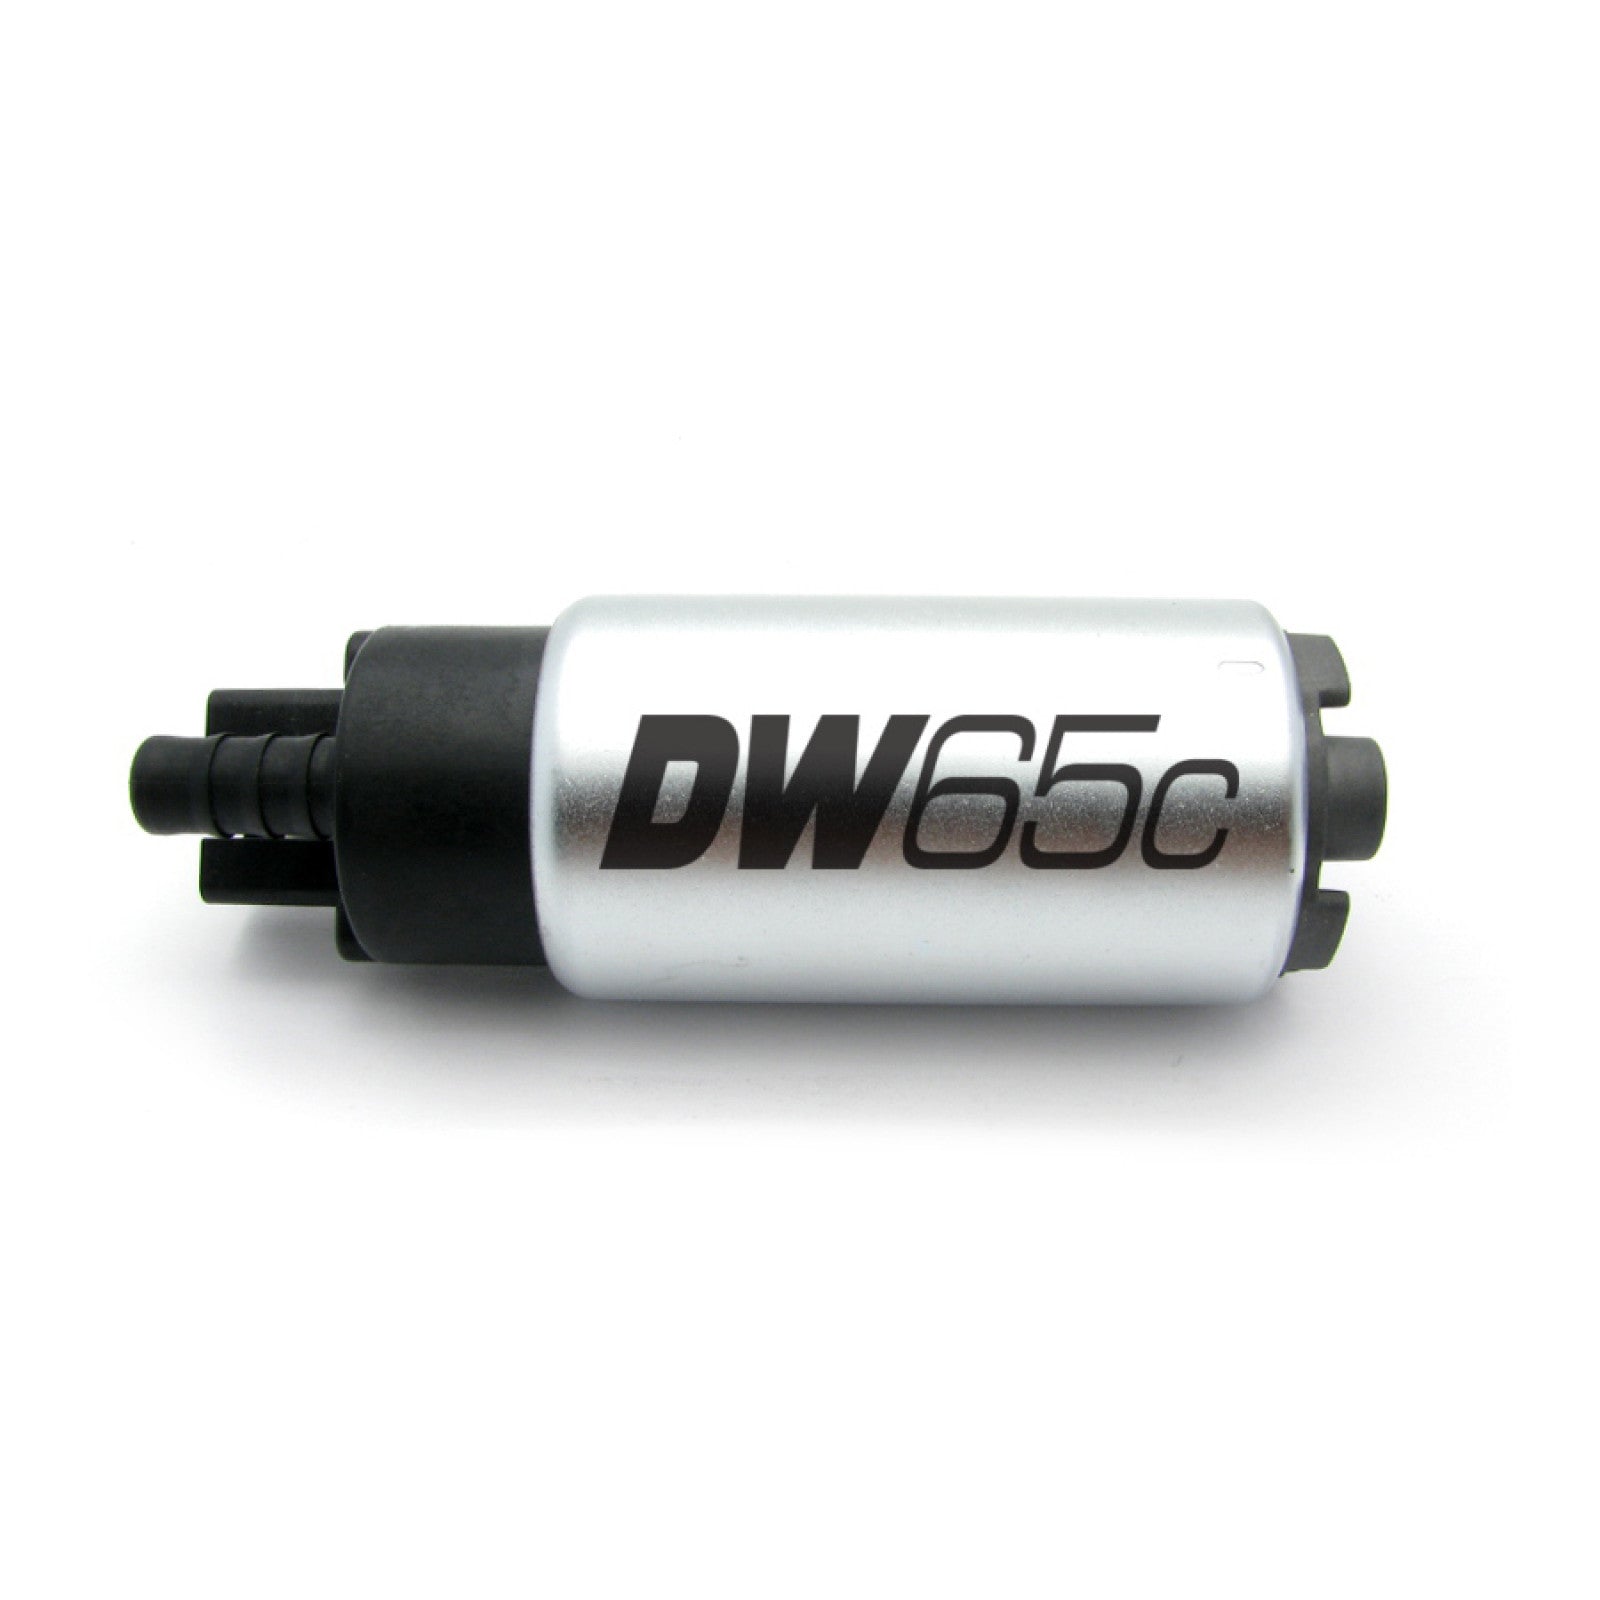 Deatschwerks DW65C 265lph Fuel Pump for 12-16 Honda Civic, Mazda Mazdaspeed Models